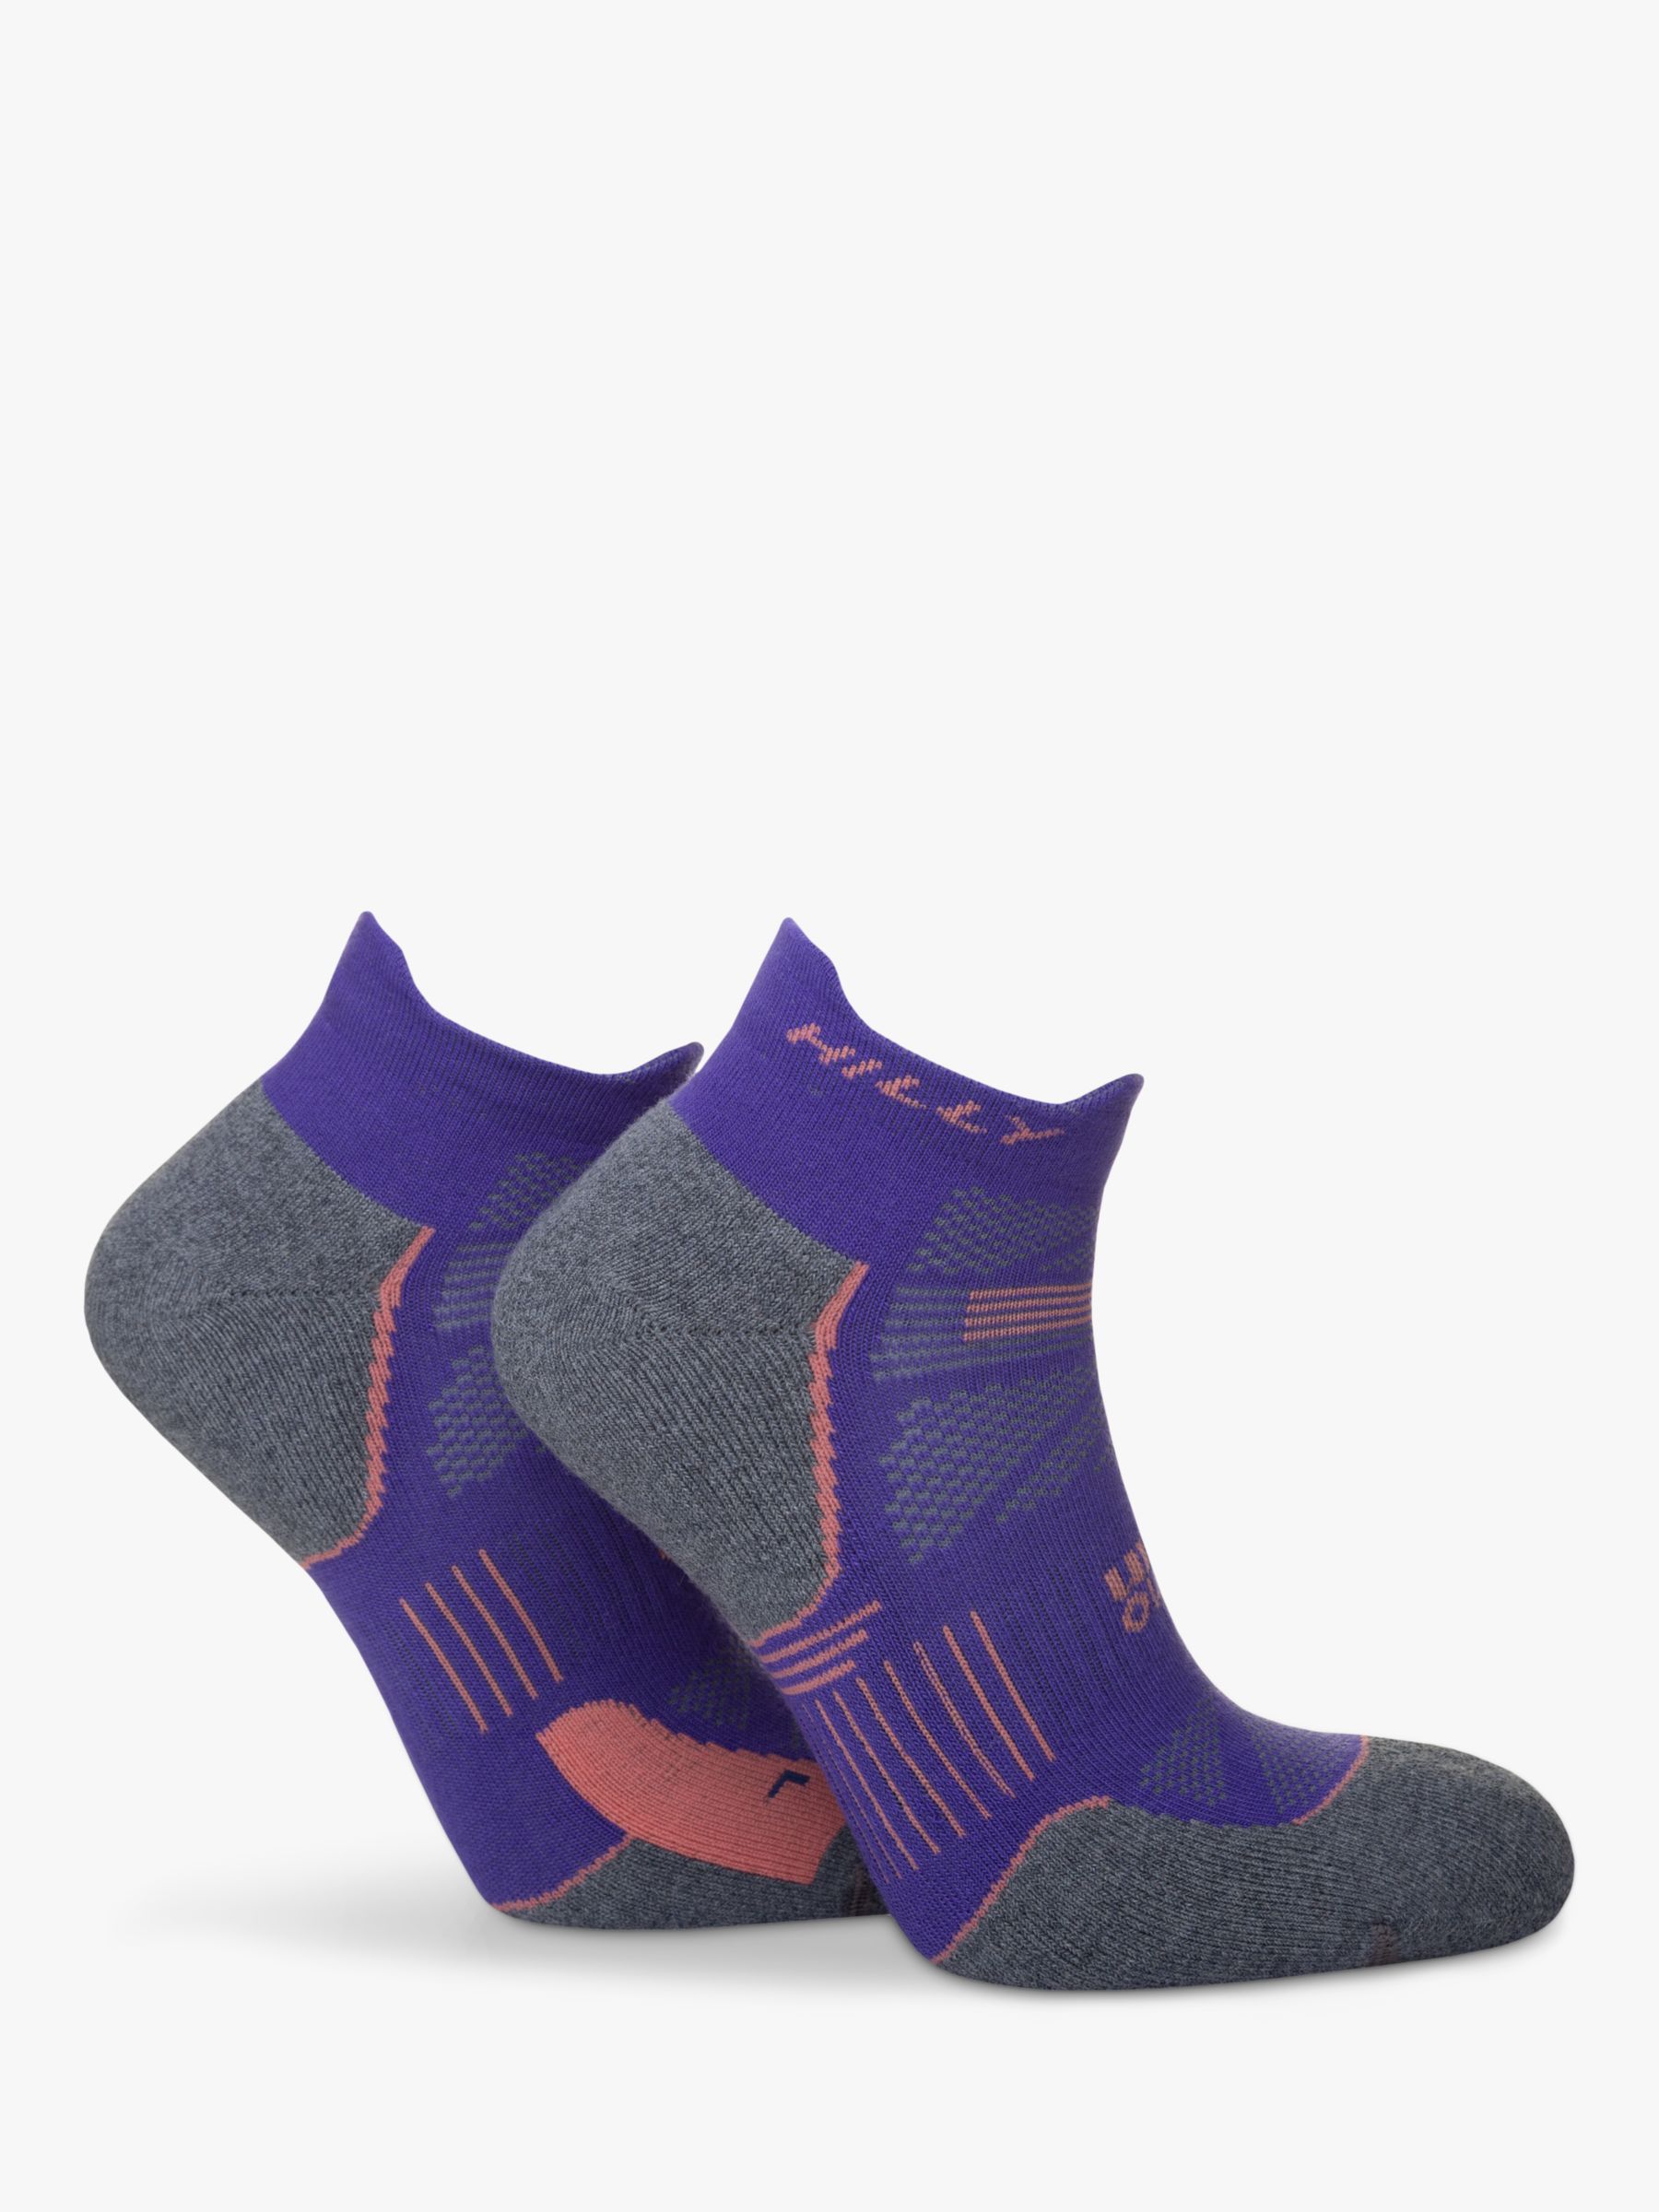 Hilly Supreme Ankle Running Socks, Plum/Grey Marl, S